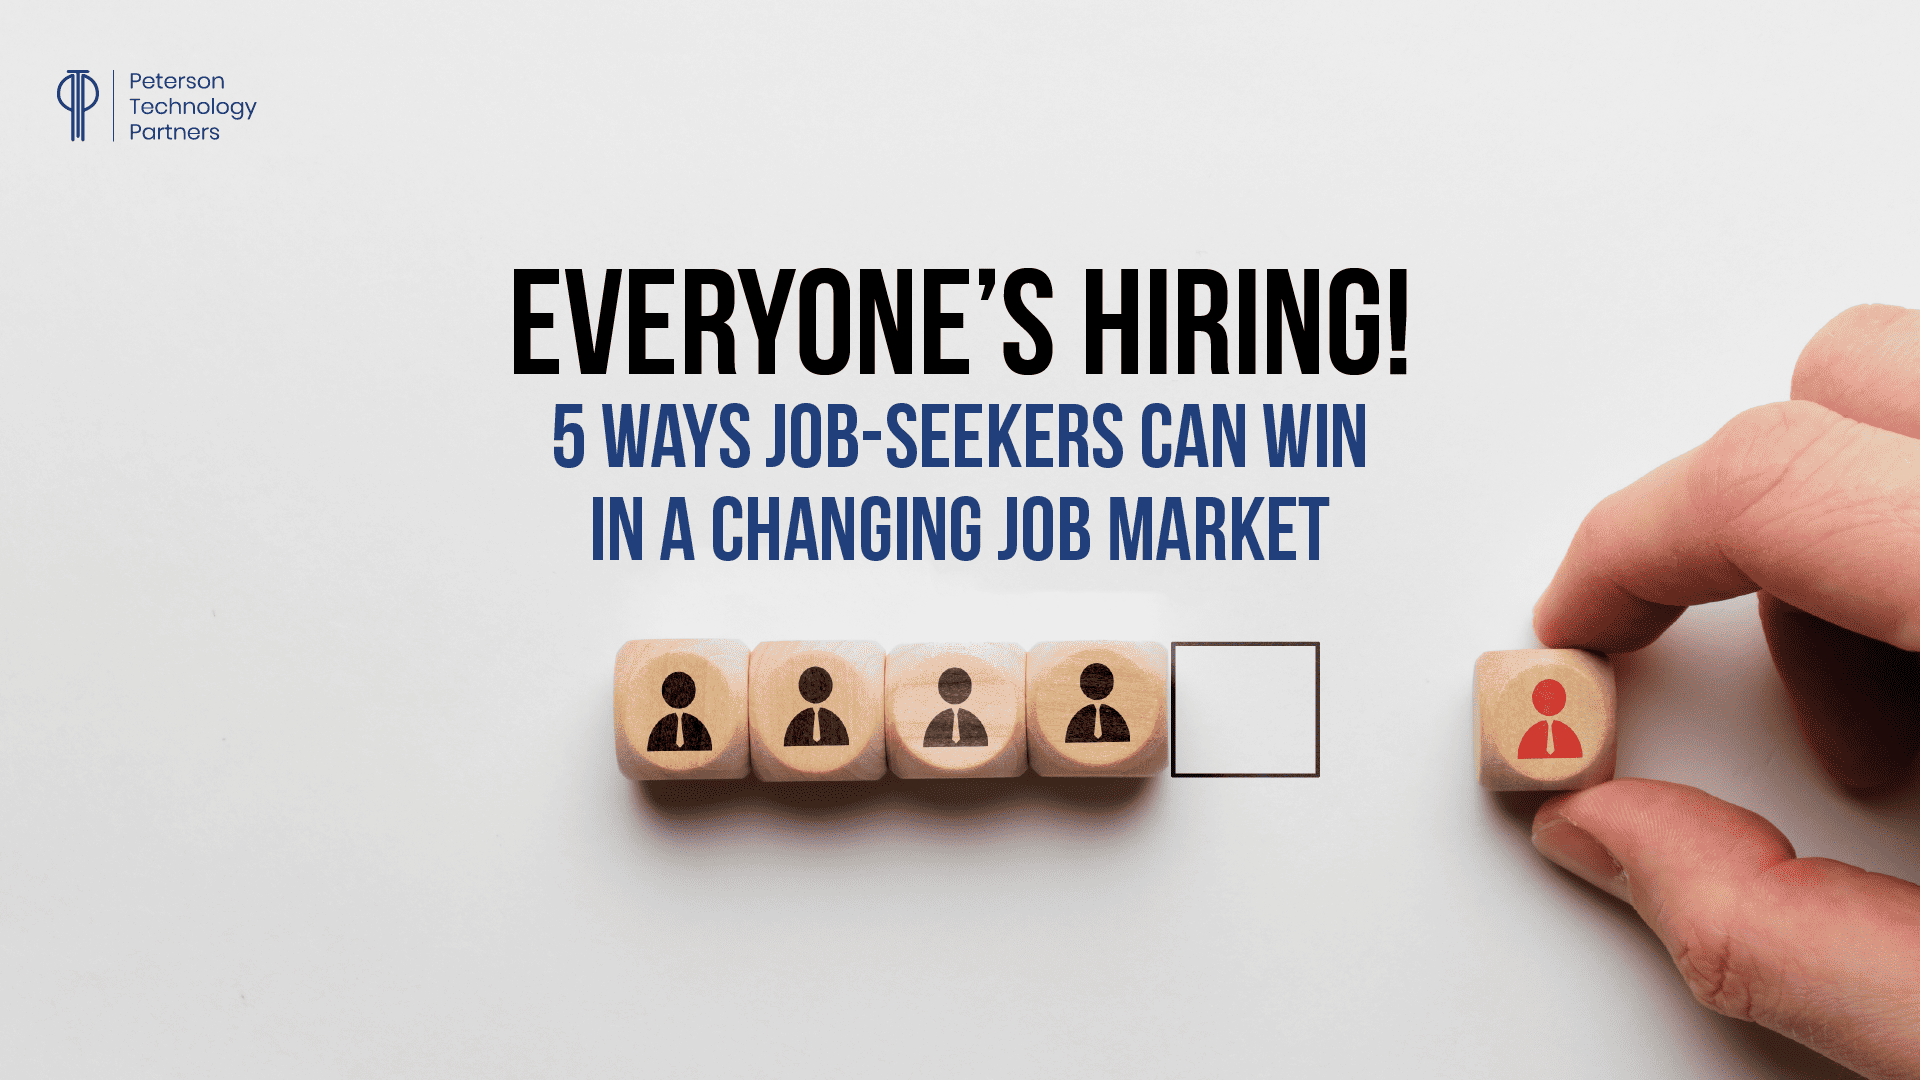 Everyone’s hiring! 5 ways job-seekers can win in a changing job market